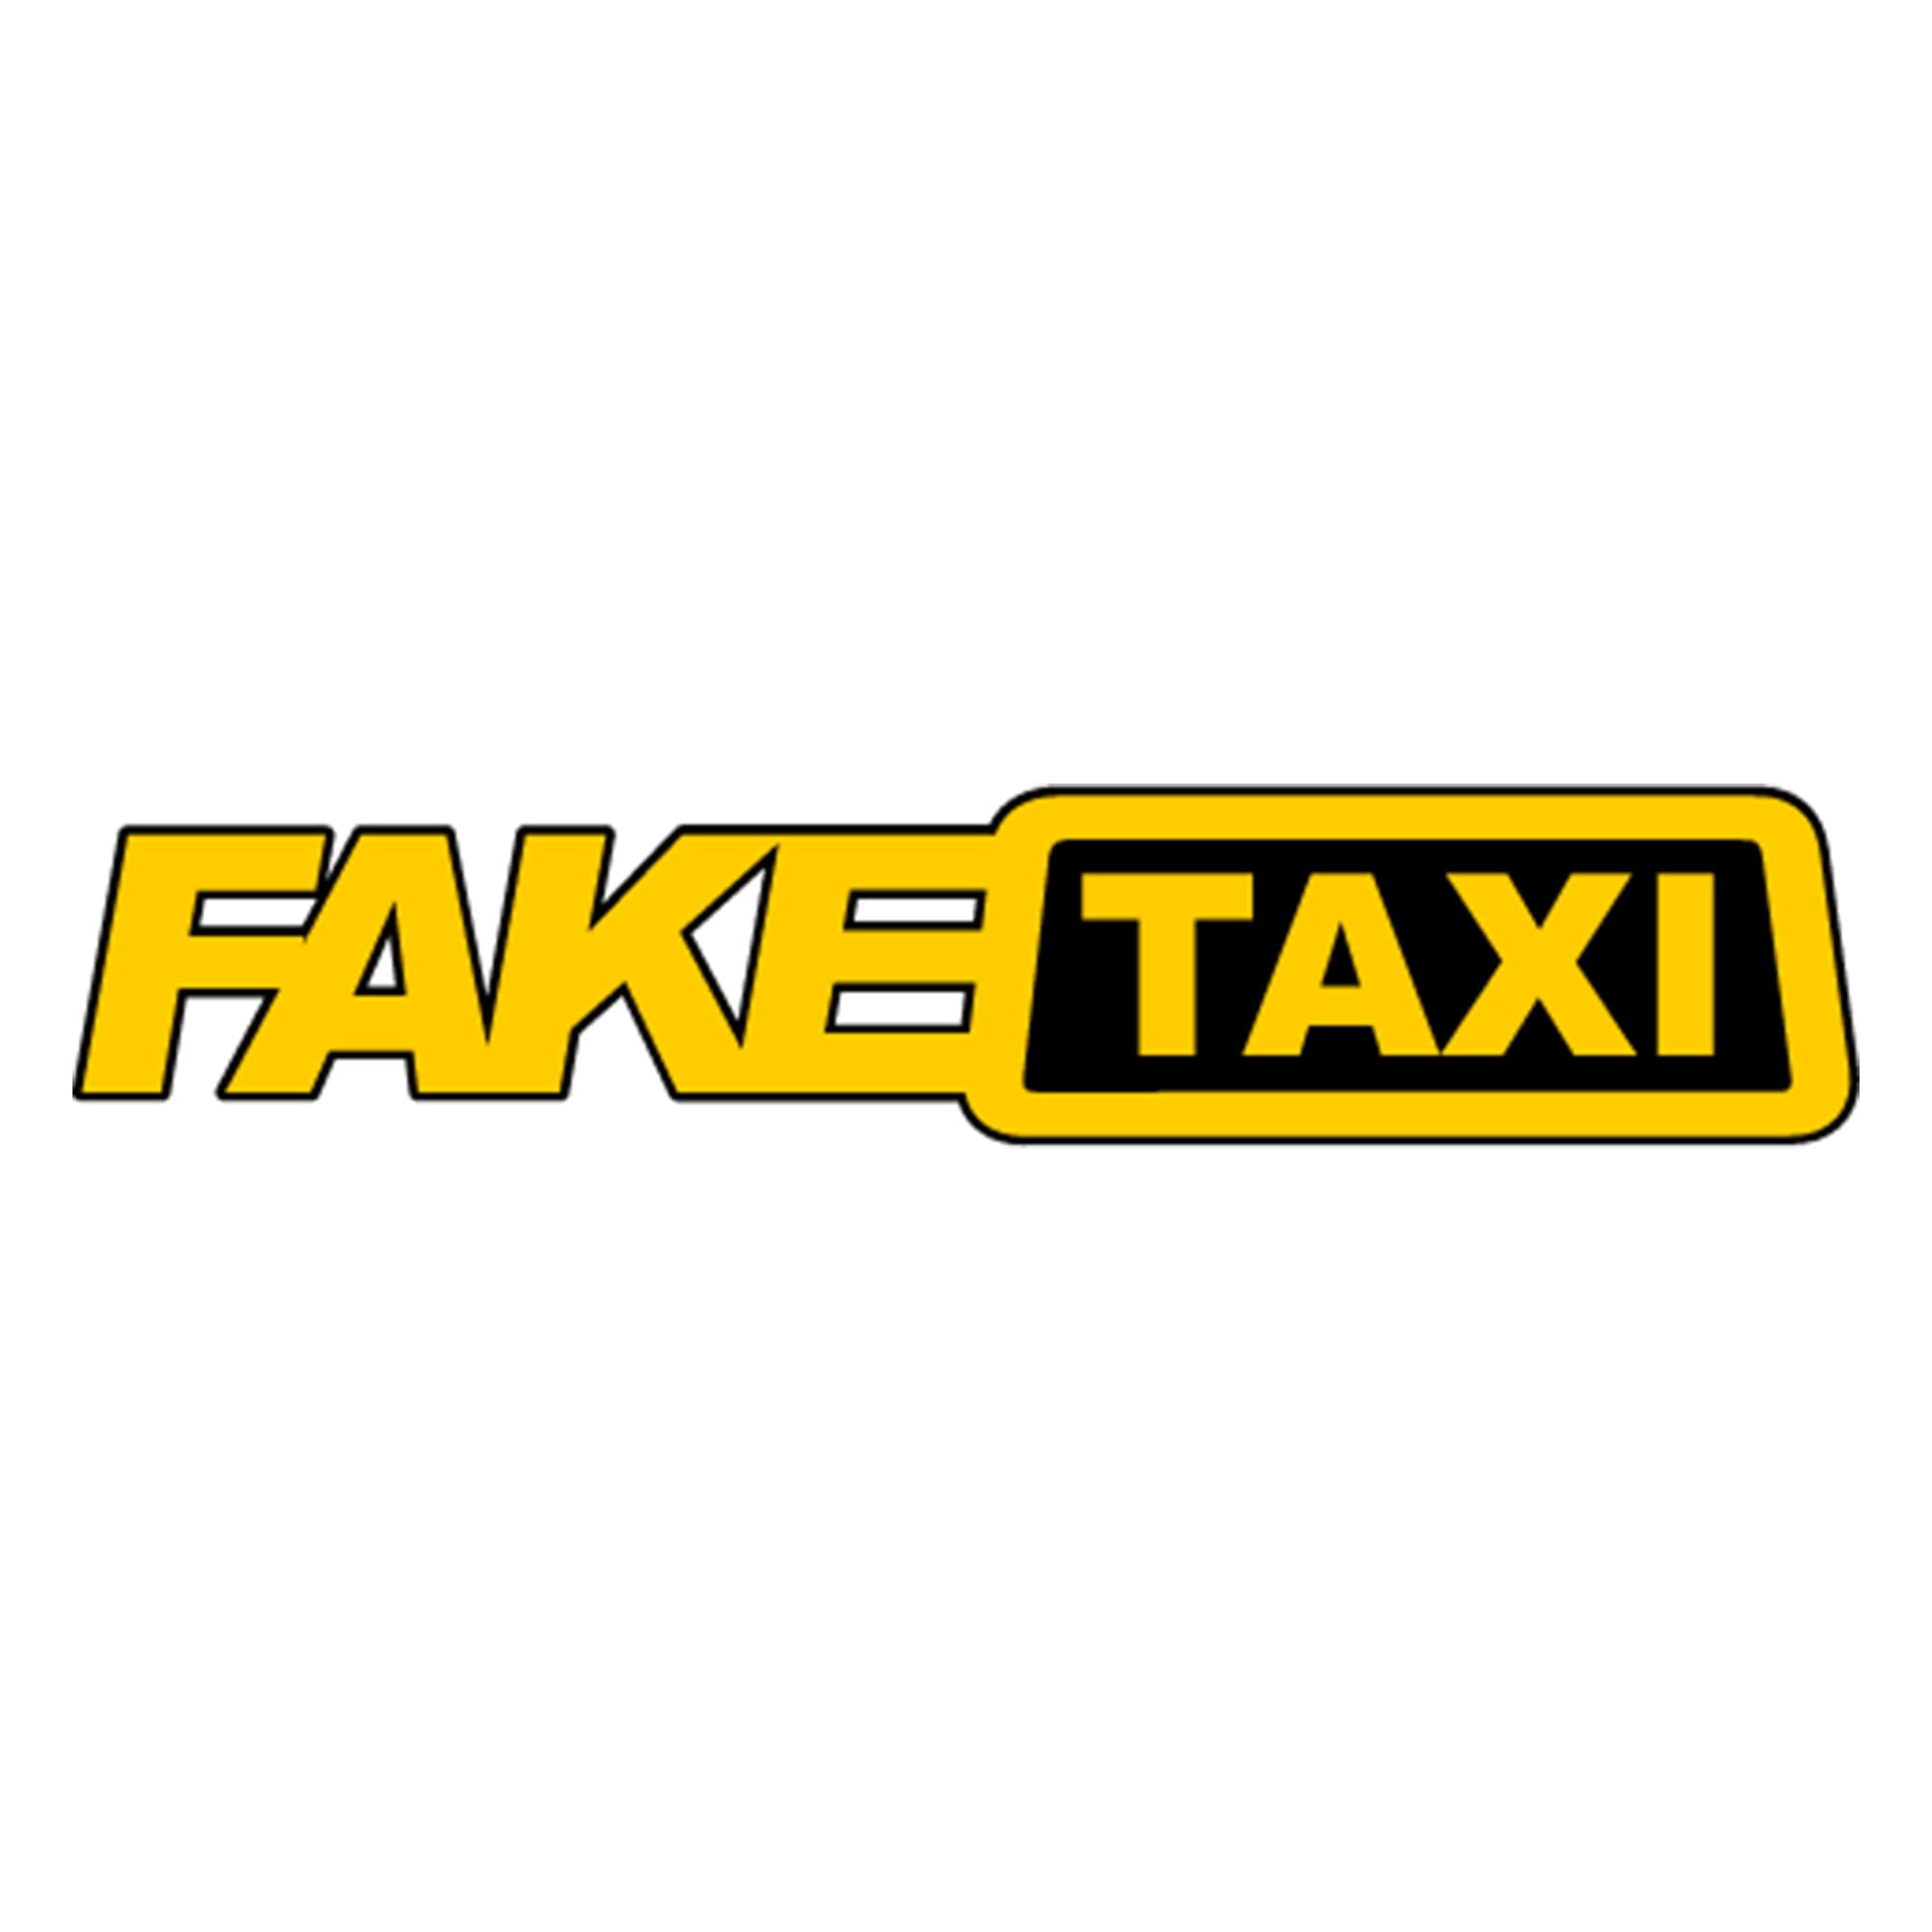 fake-taxi-sticker-etsy